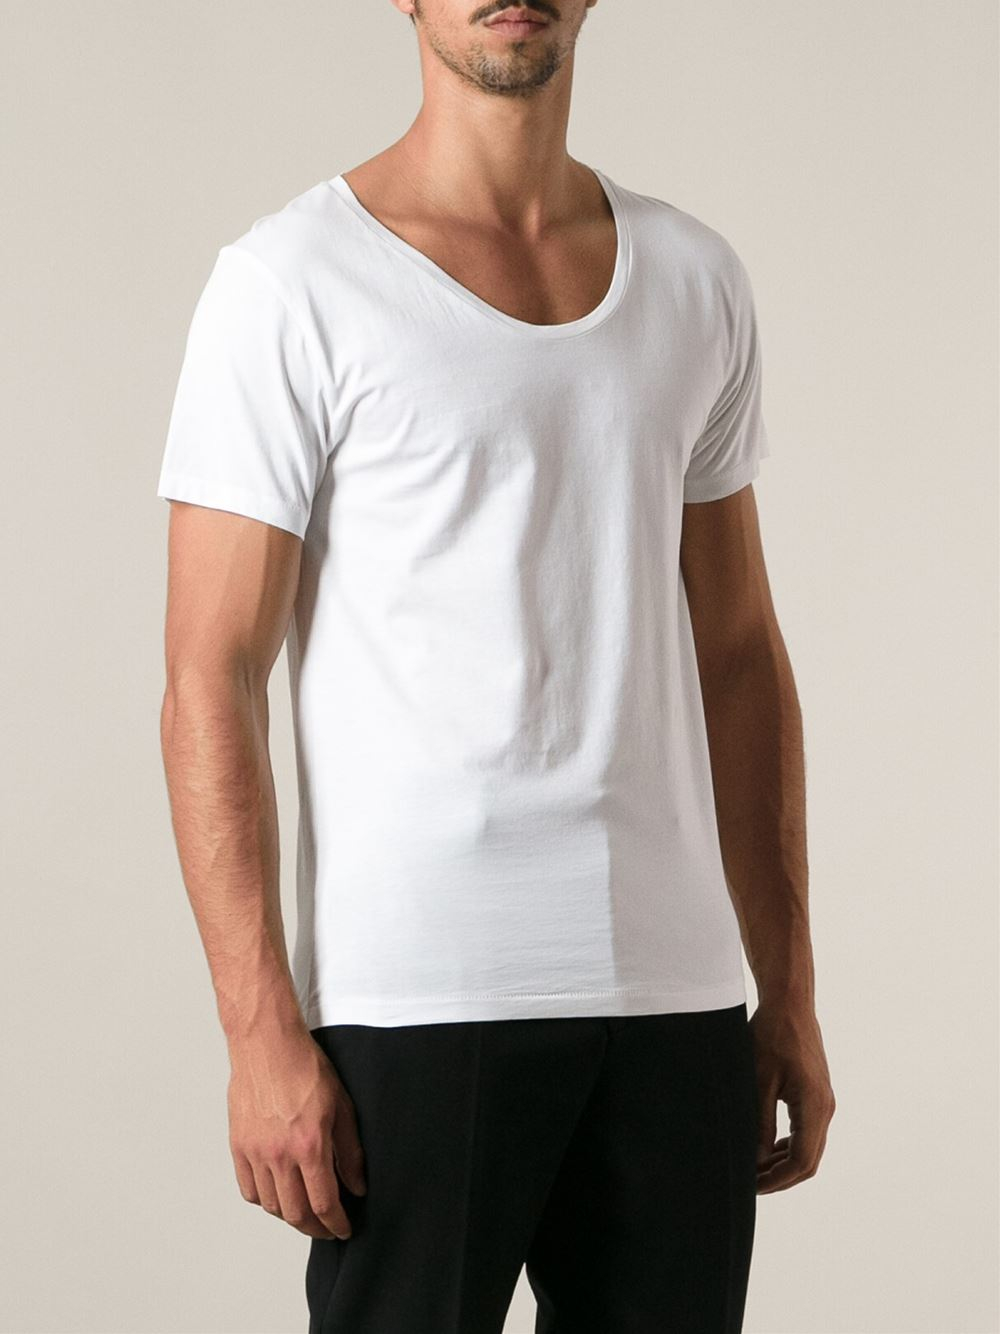 Acne Studios Limit Tshirt in White for Men | Lyst